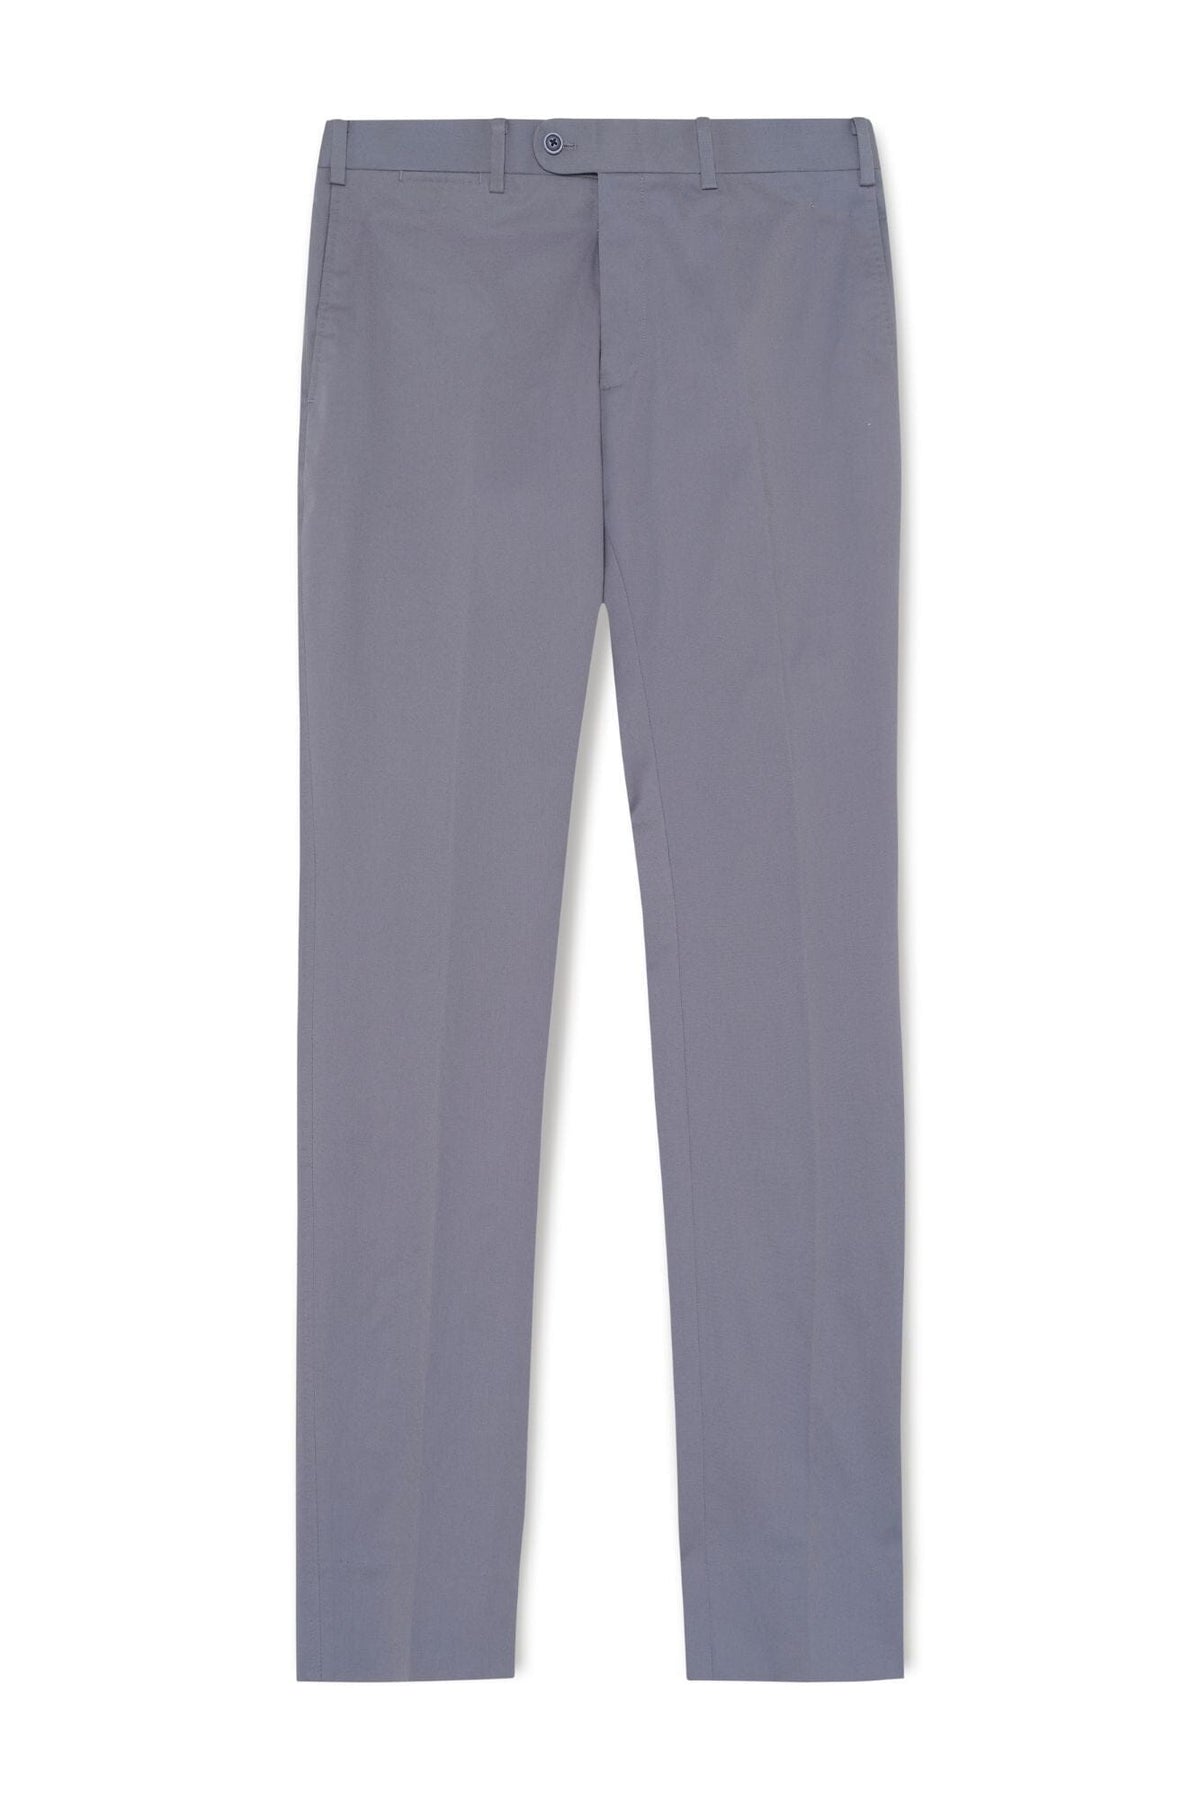 CGC Tailored Pants - Grey Blue Stretch Cotton